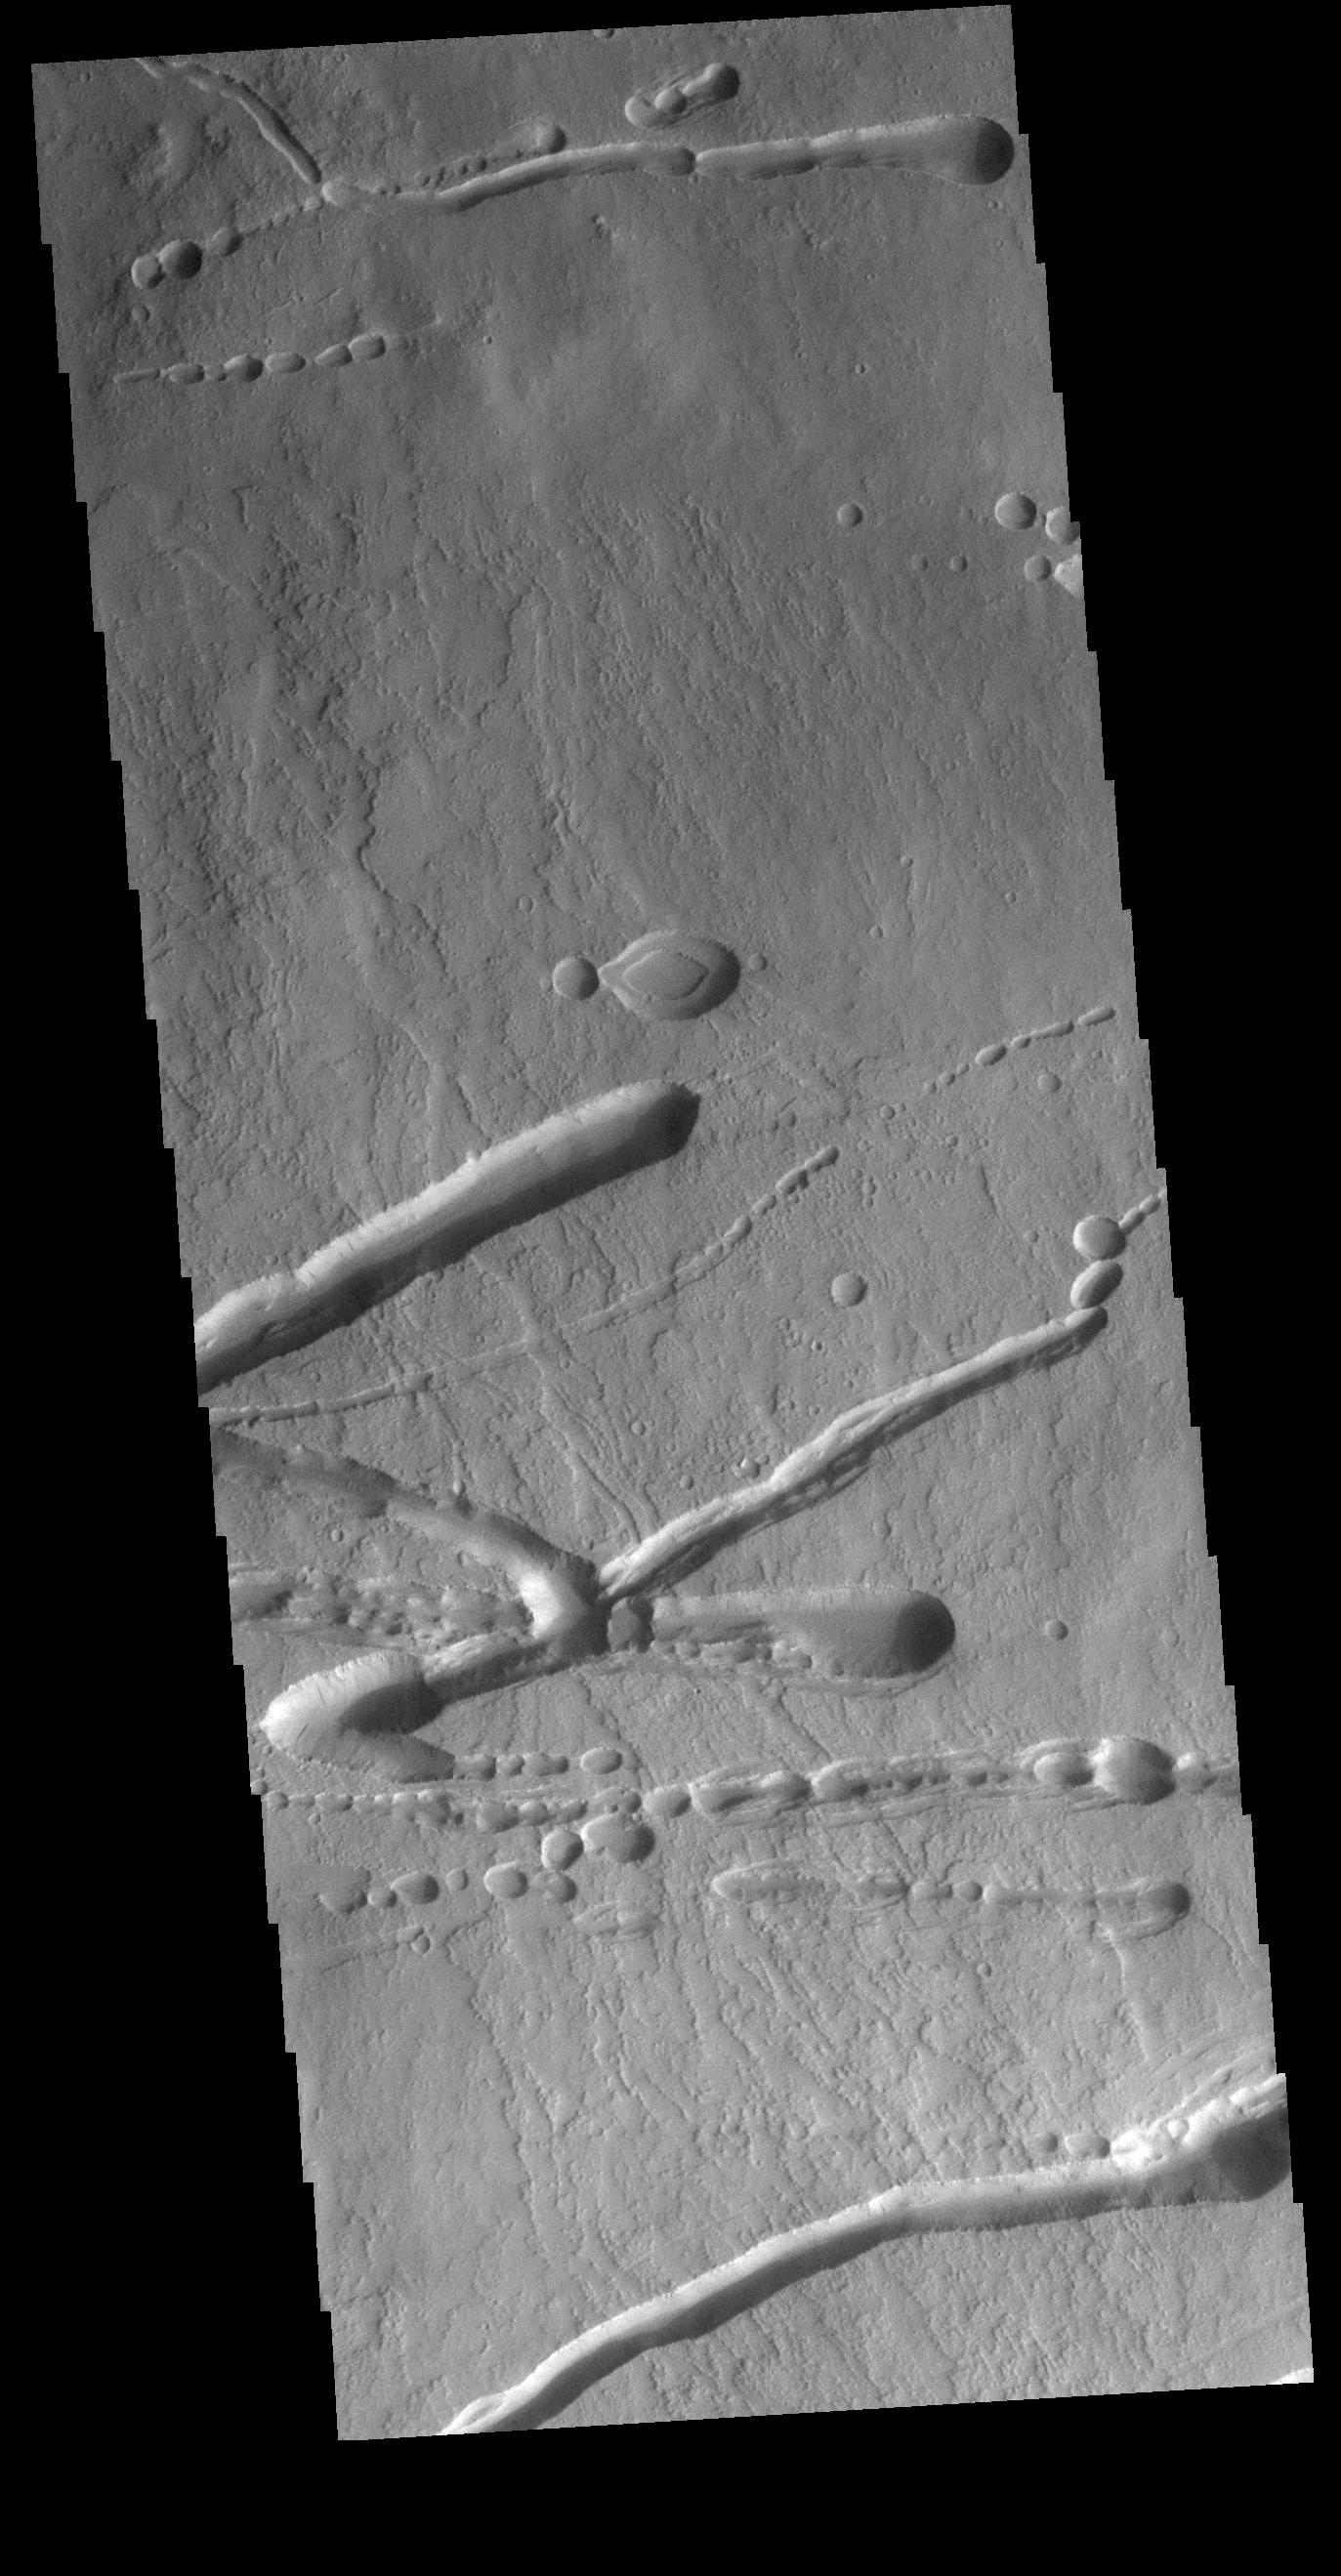 PIA22669: Ascraeus Mons